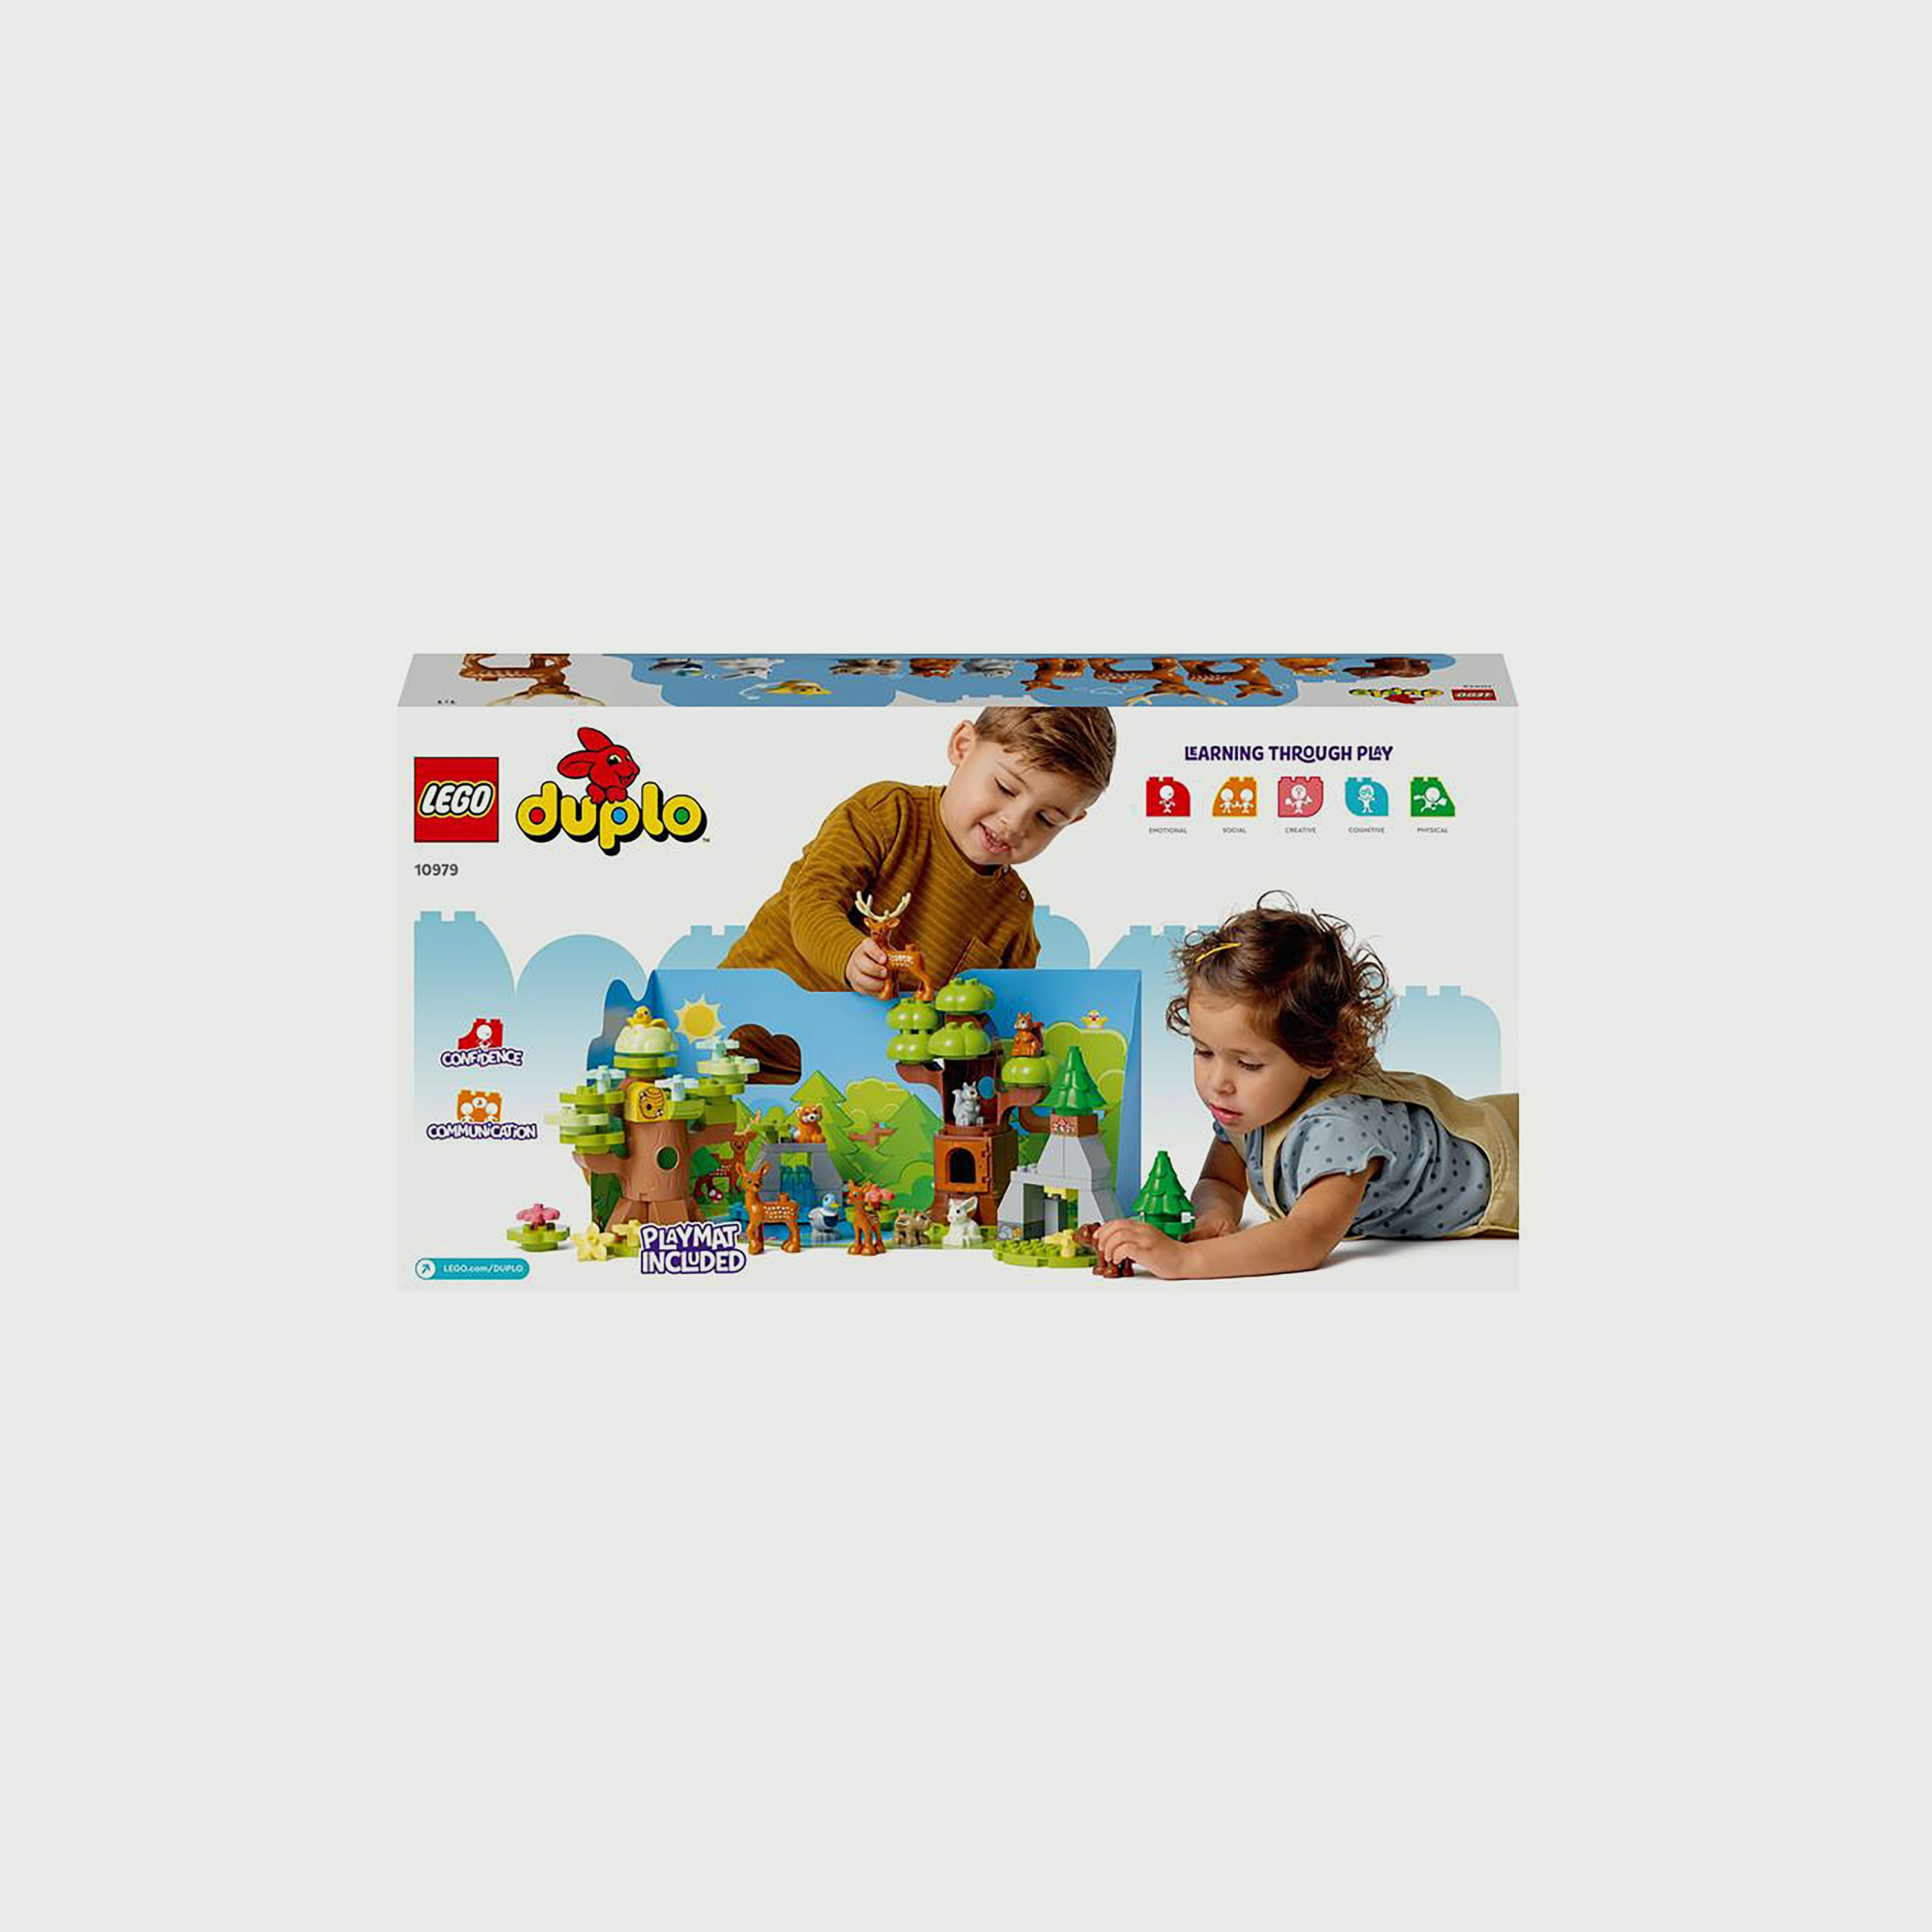 Buy LEGO DUPLO Wild Animals of Europe 10979 Building Toy (85